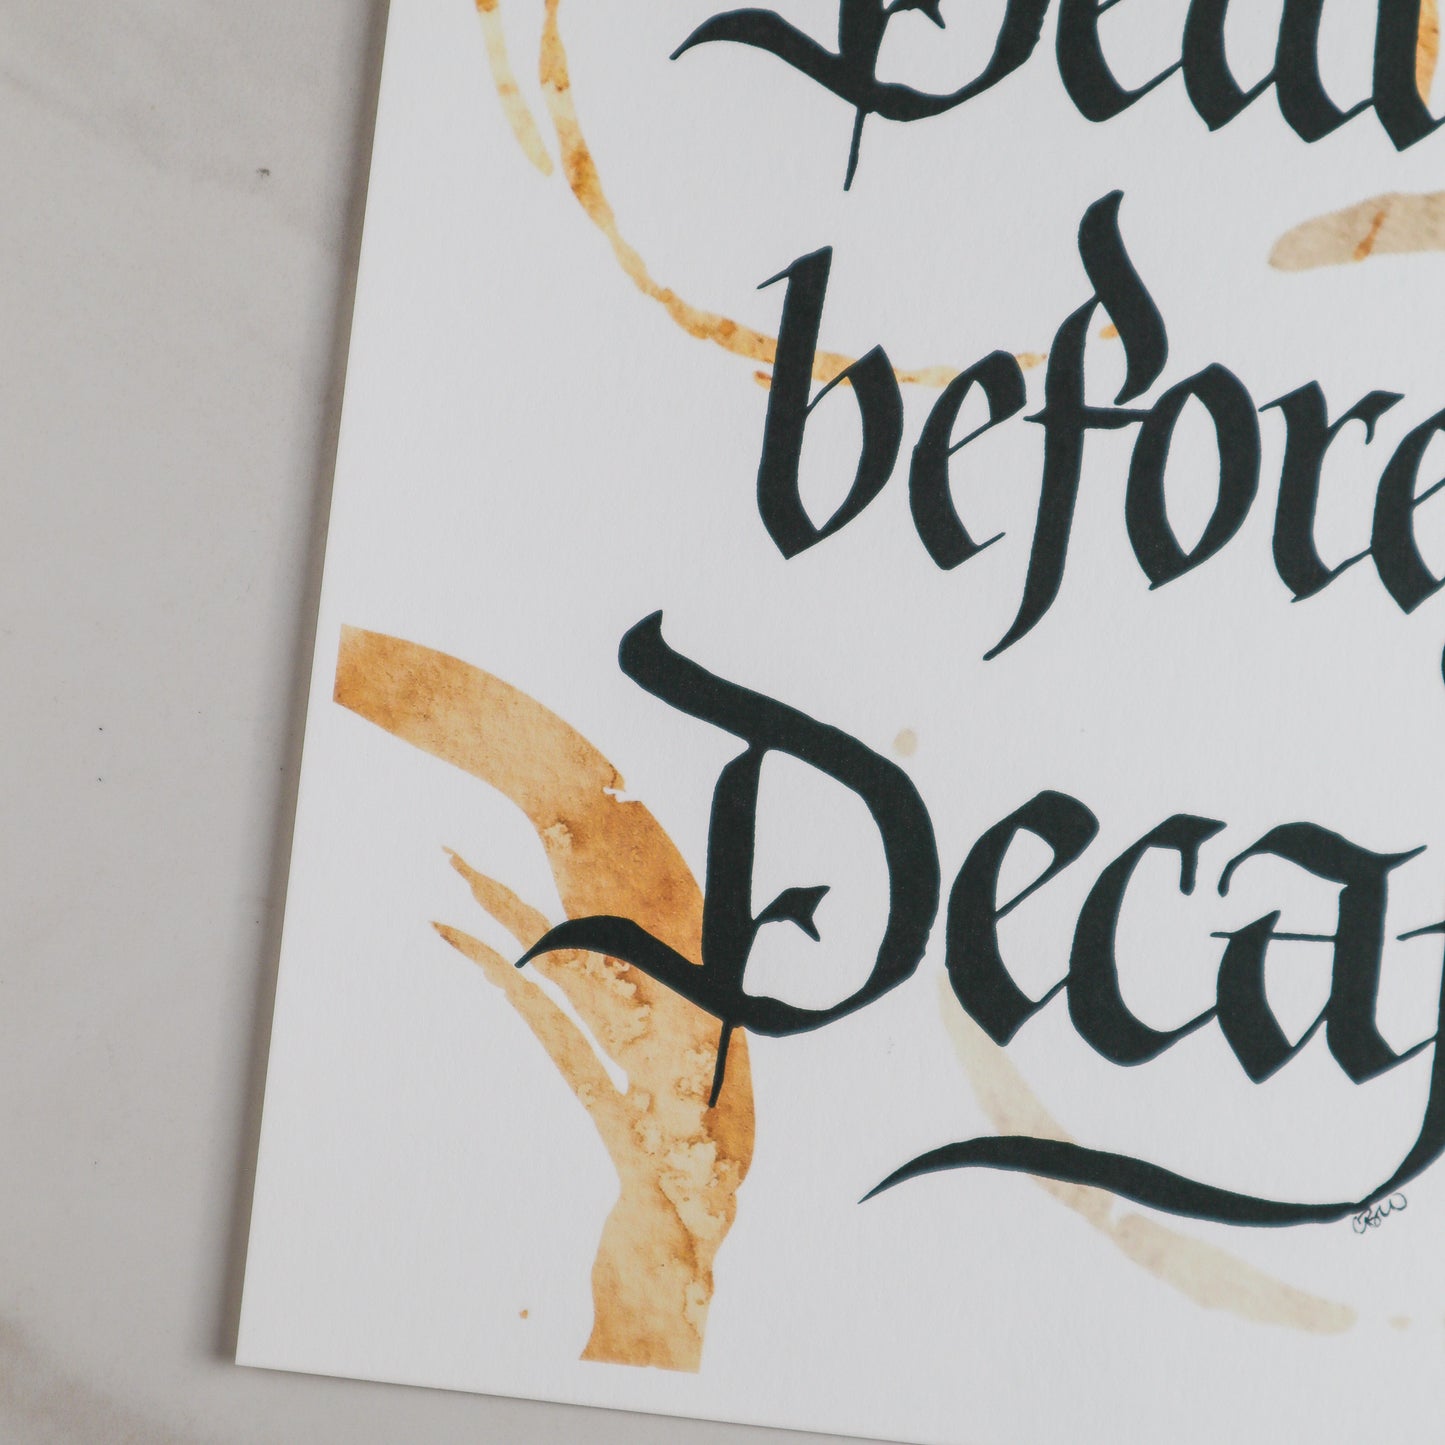 Death before Decaf Art Print